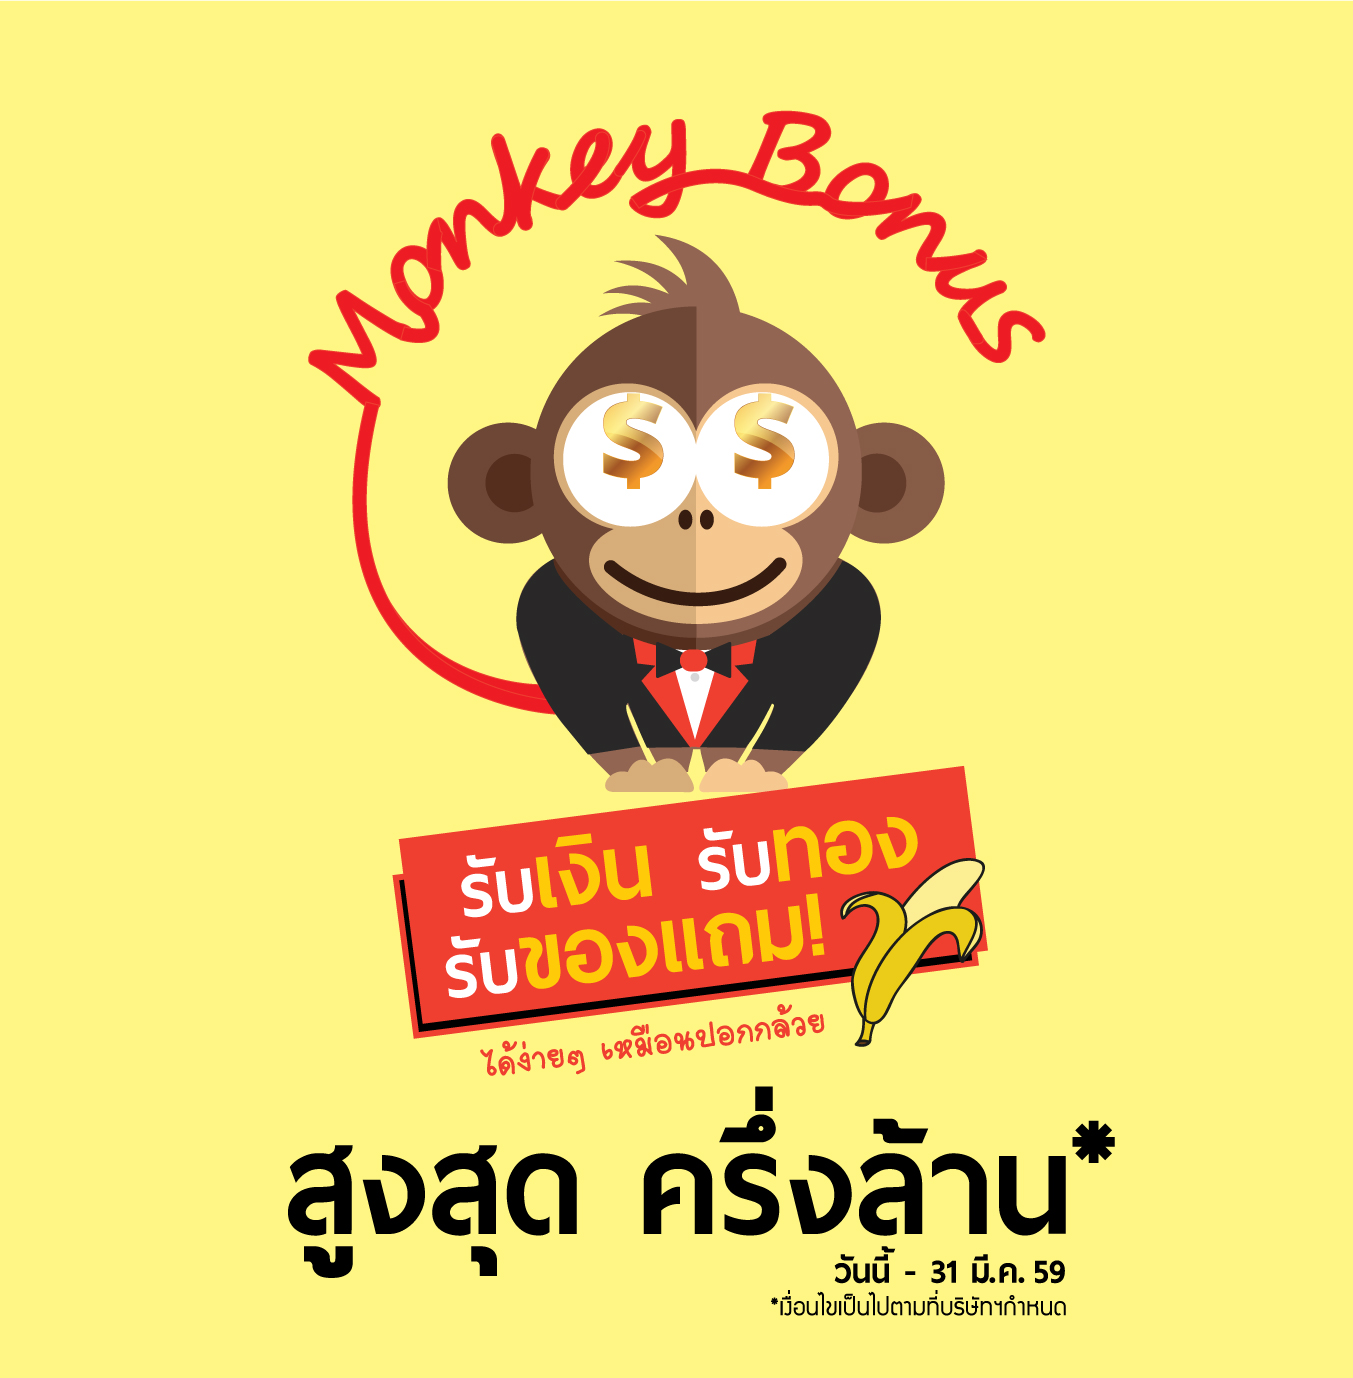 AW monkey bonus final